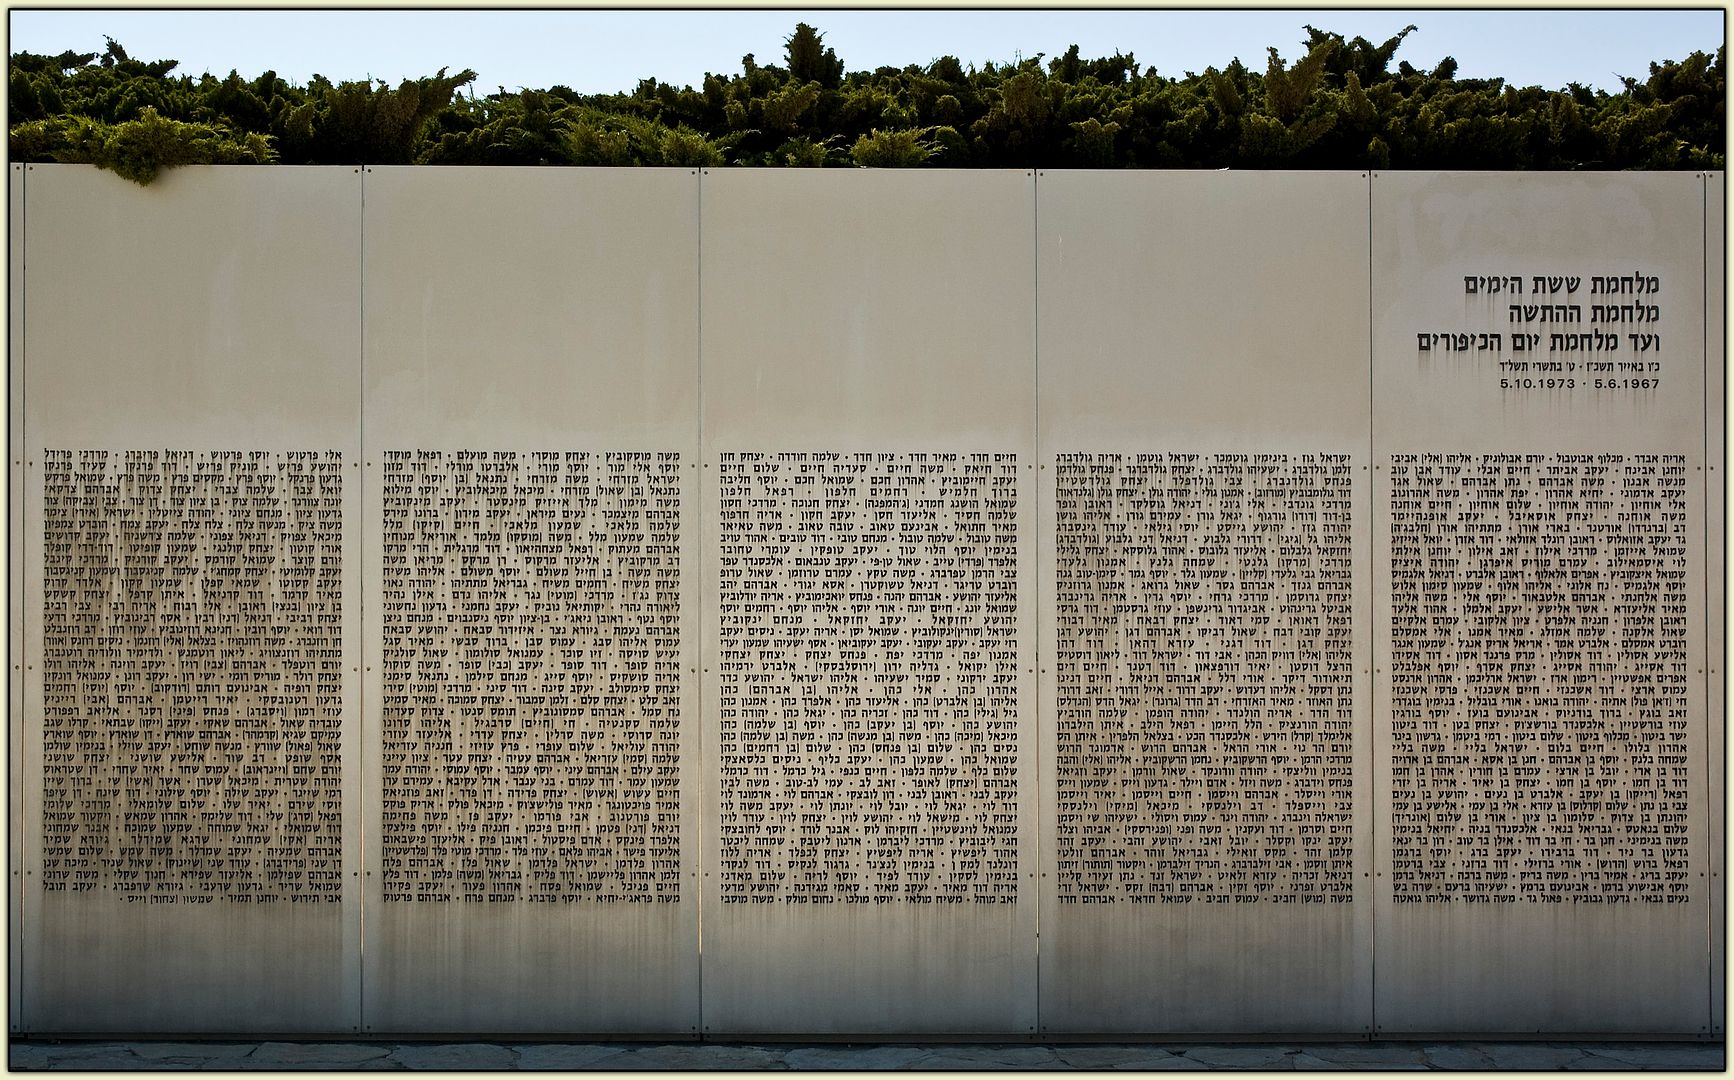 Wall of Remembrance at Latrun